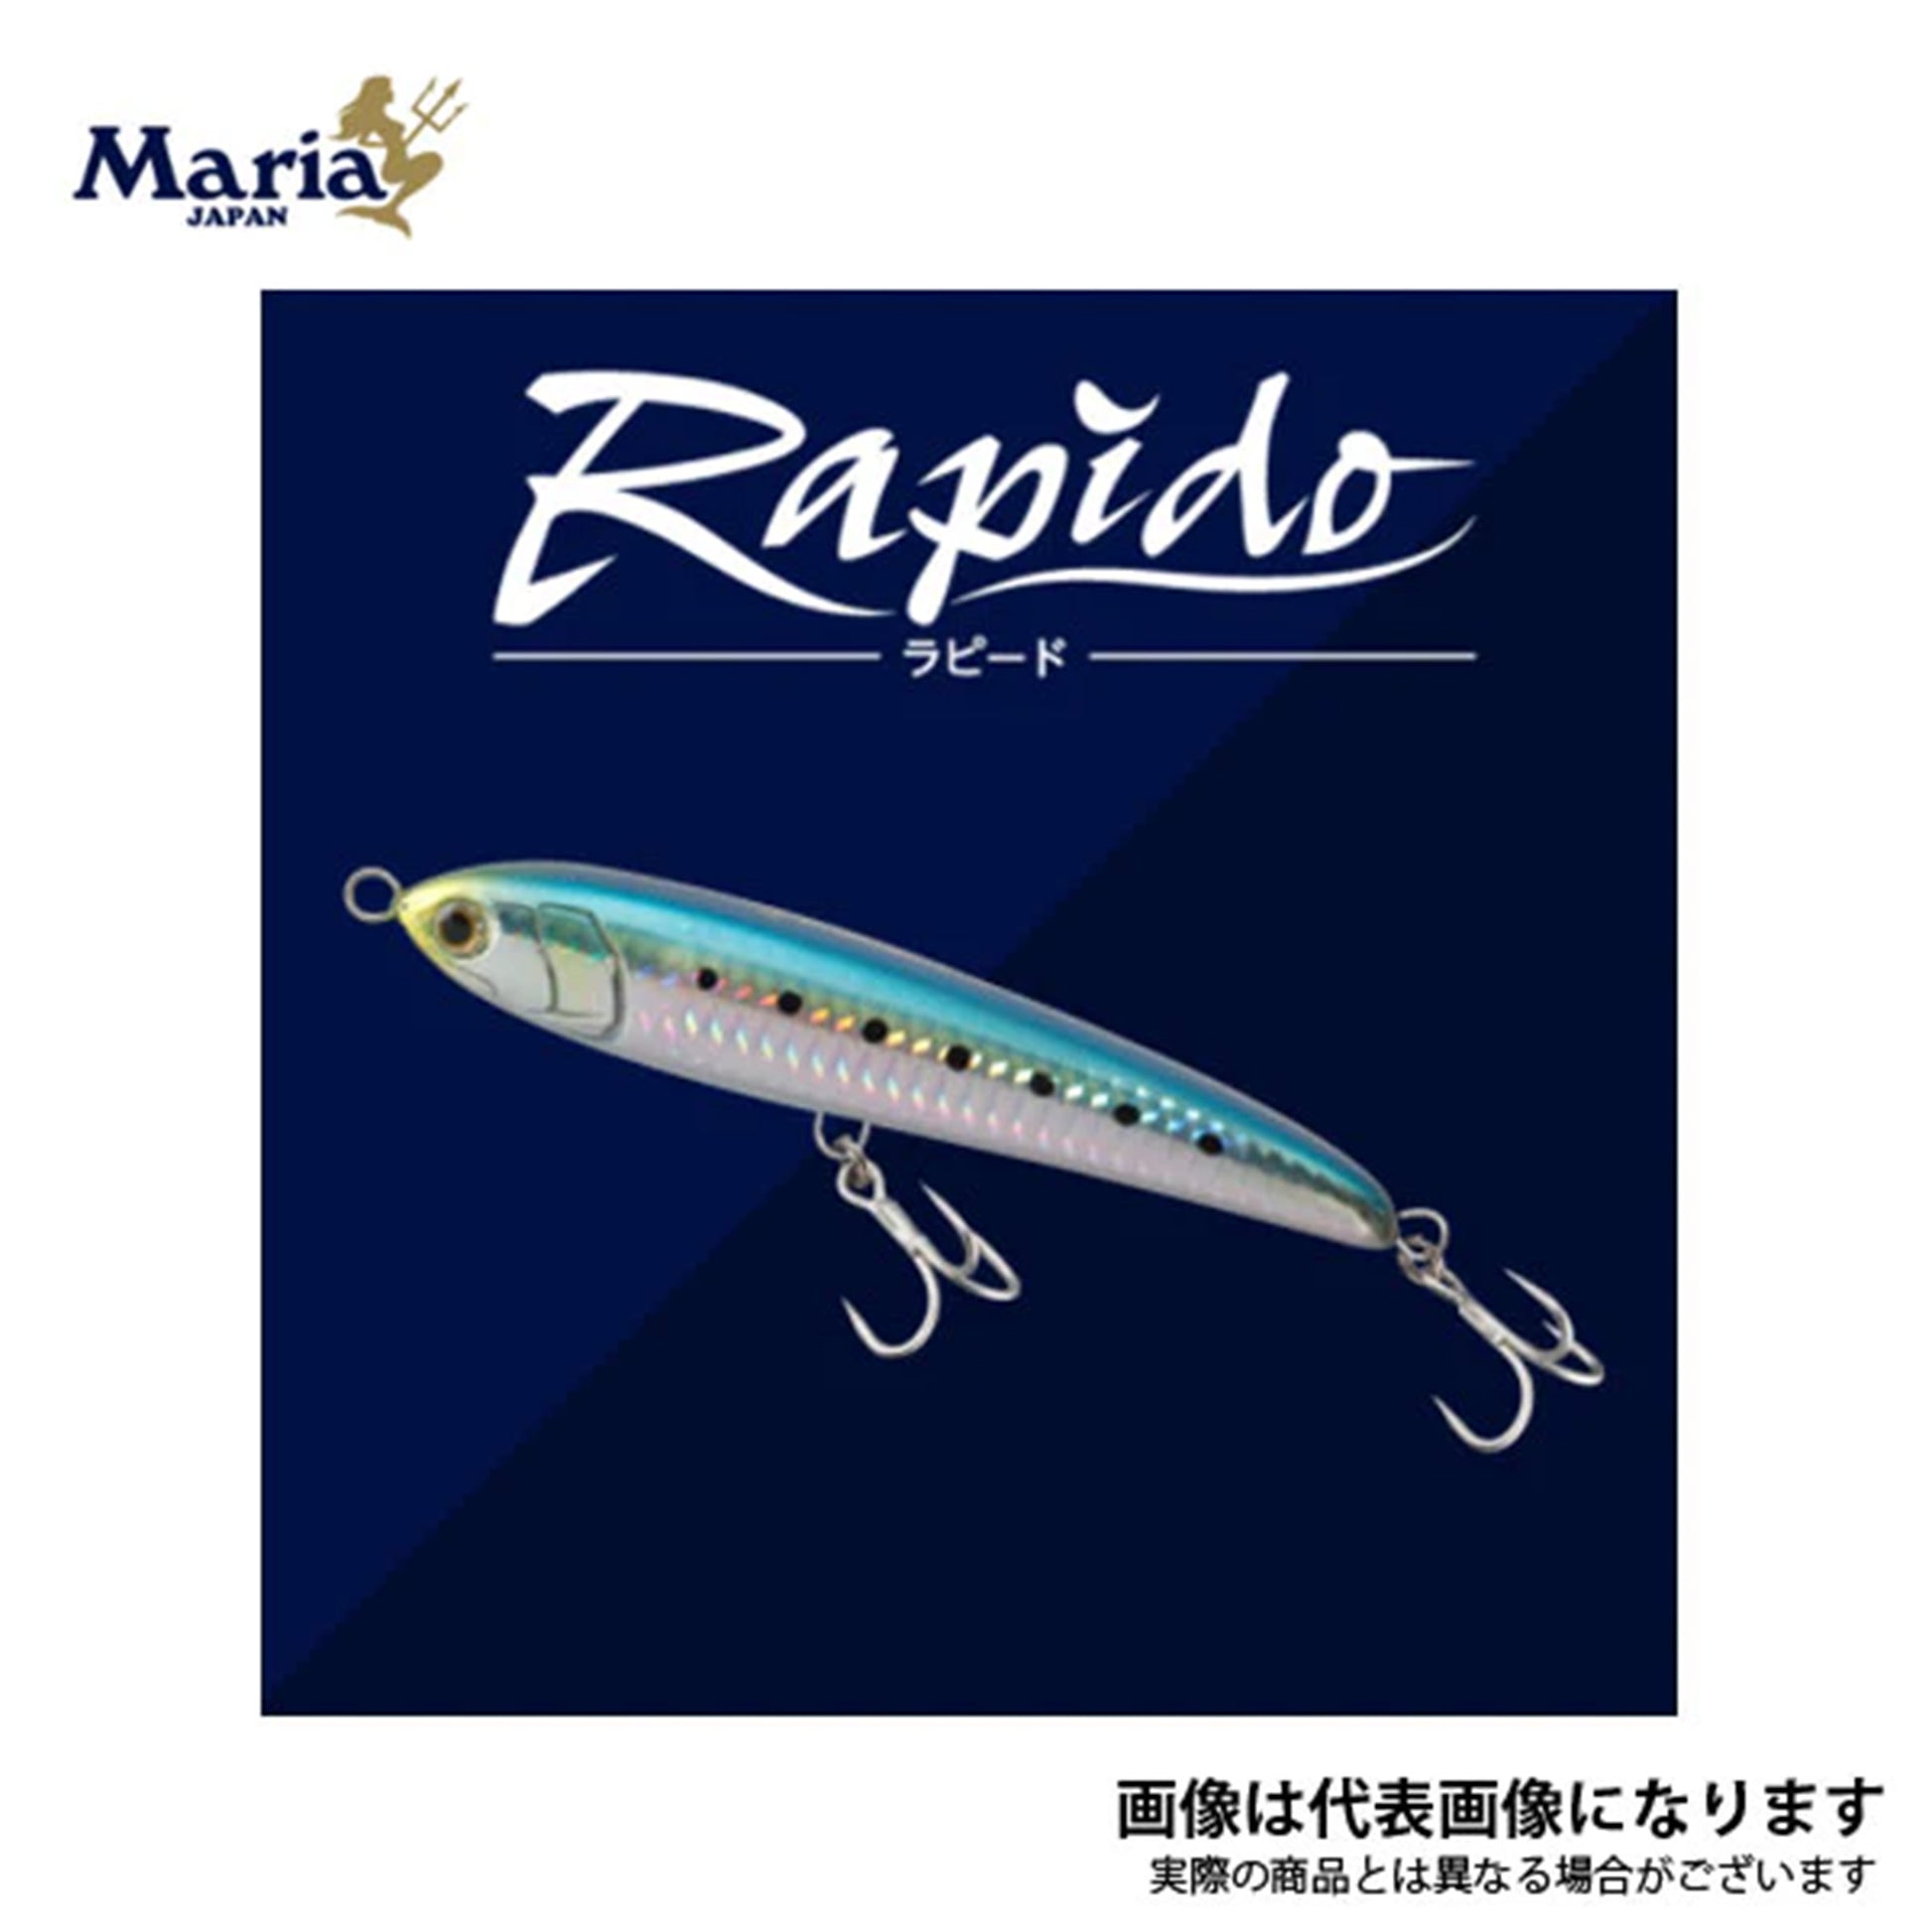 MARIA/Rapido F130 – SEASAW-ONLINE